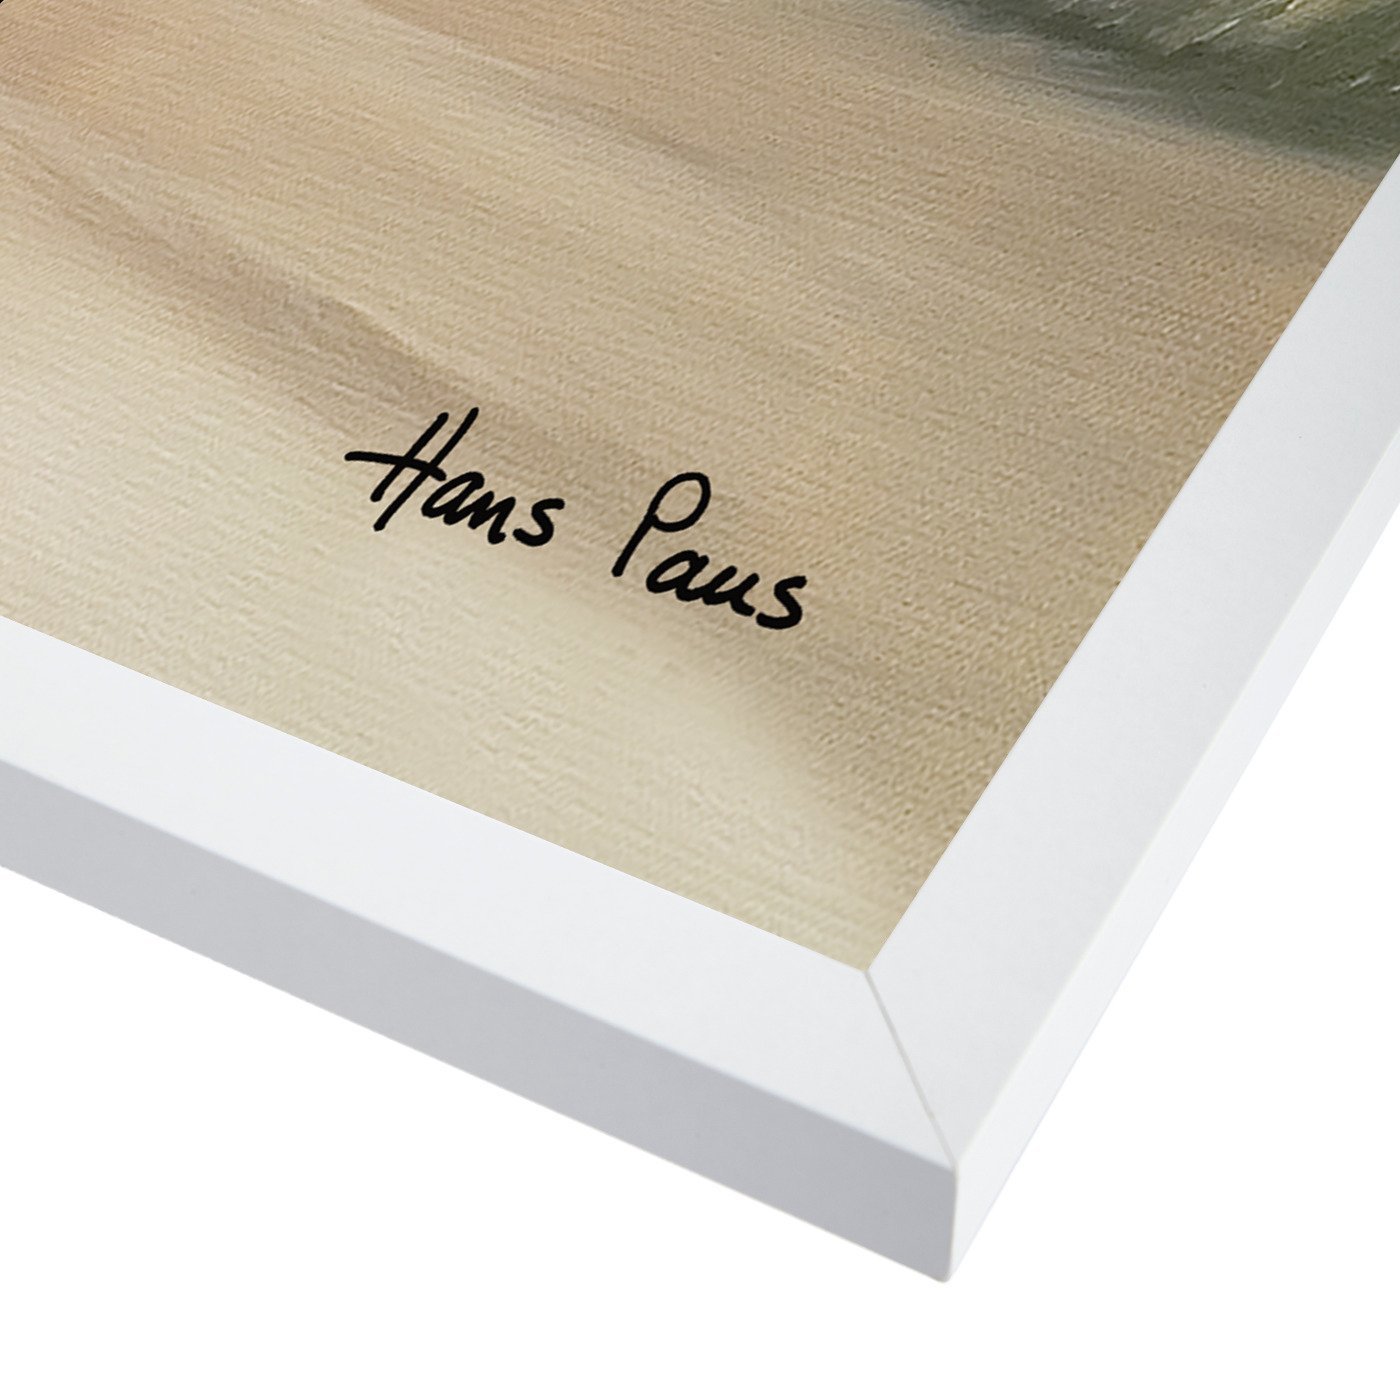 A Walk Along The Beach 7 By Hans Paus - White Framed Print - Wall Art - Americanflat